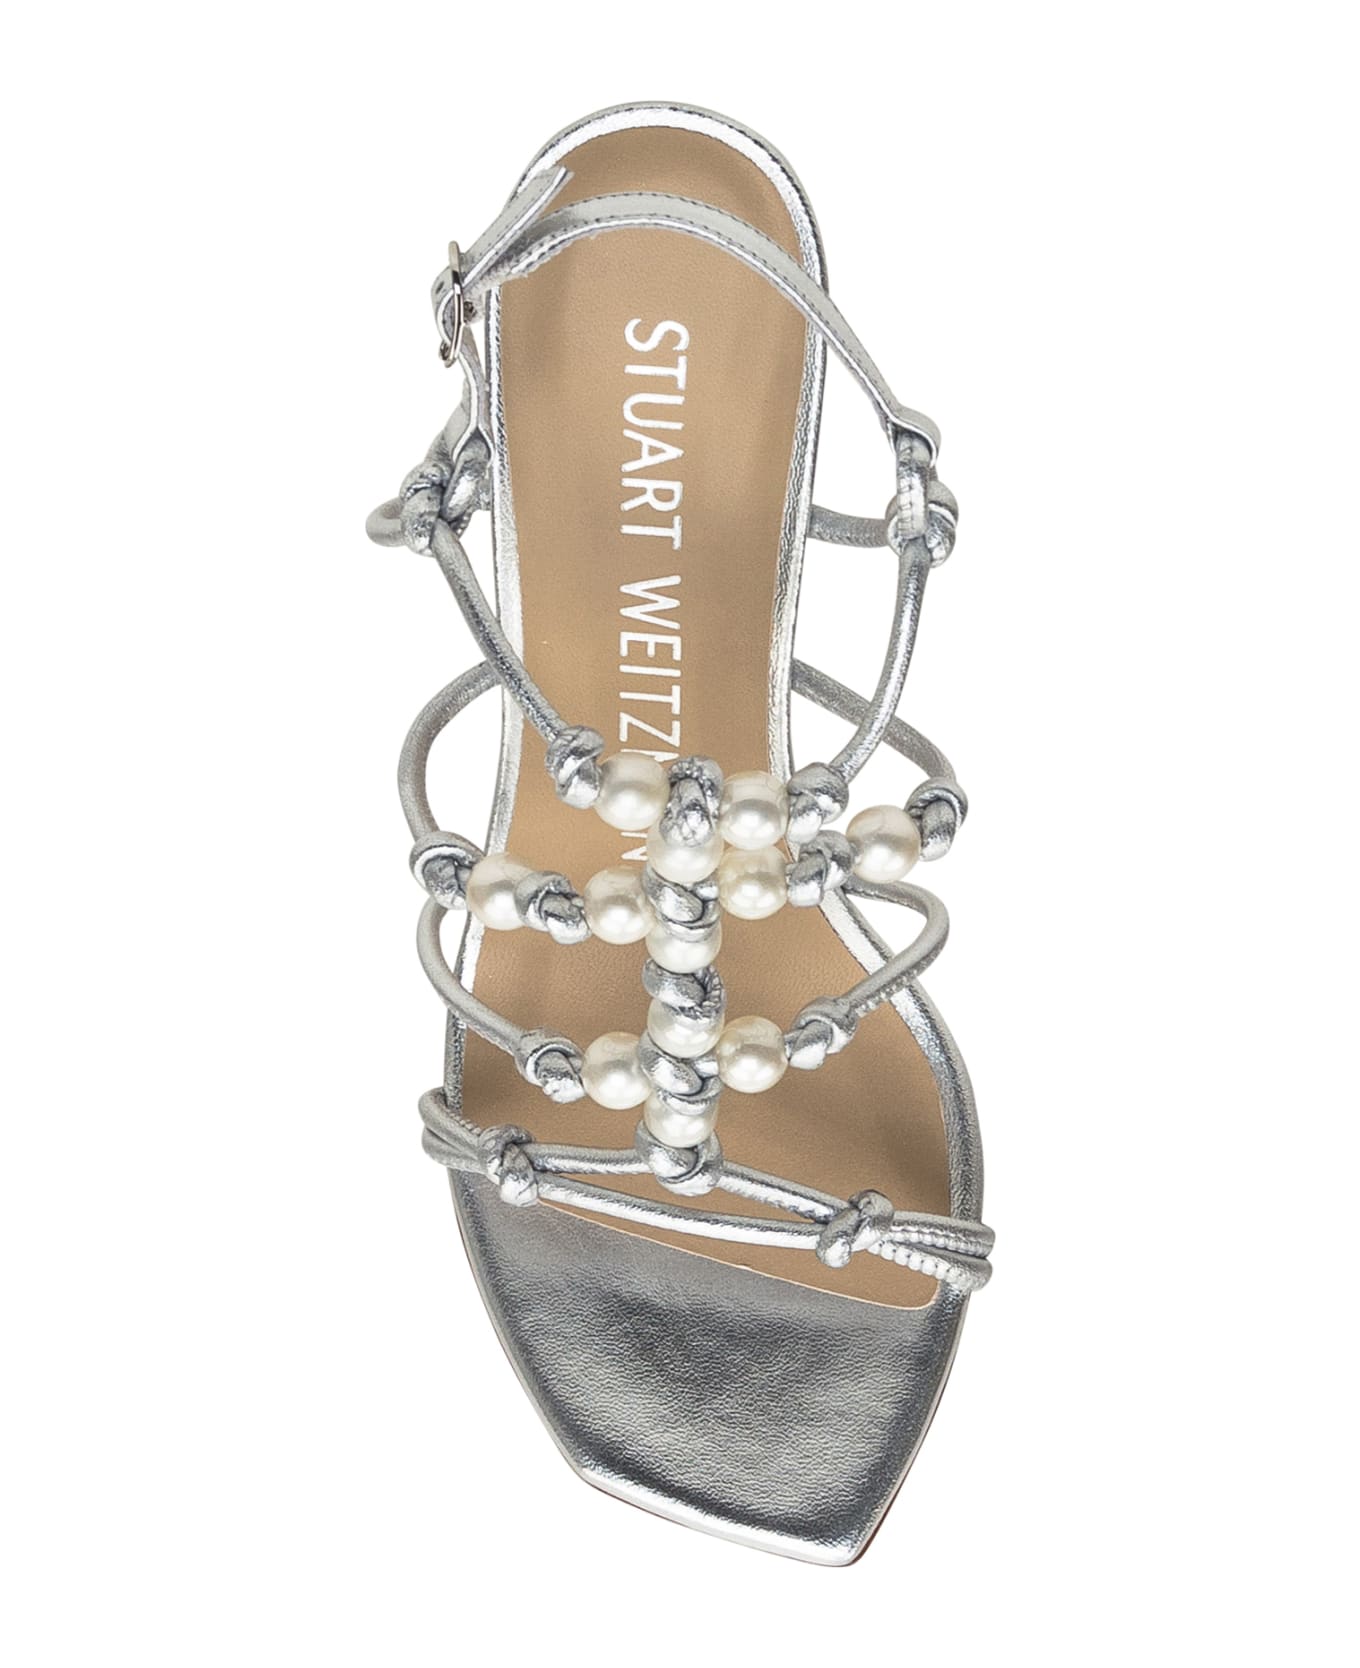 Stuart Weitzman Sandal With Pearls - ARGENTO